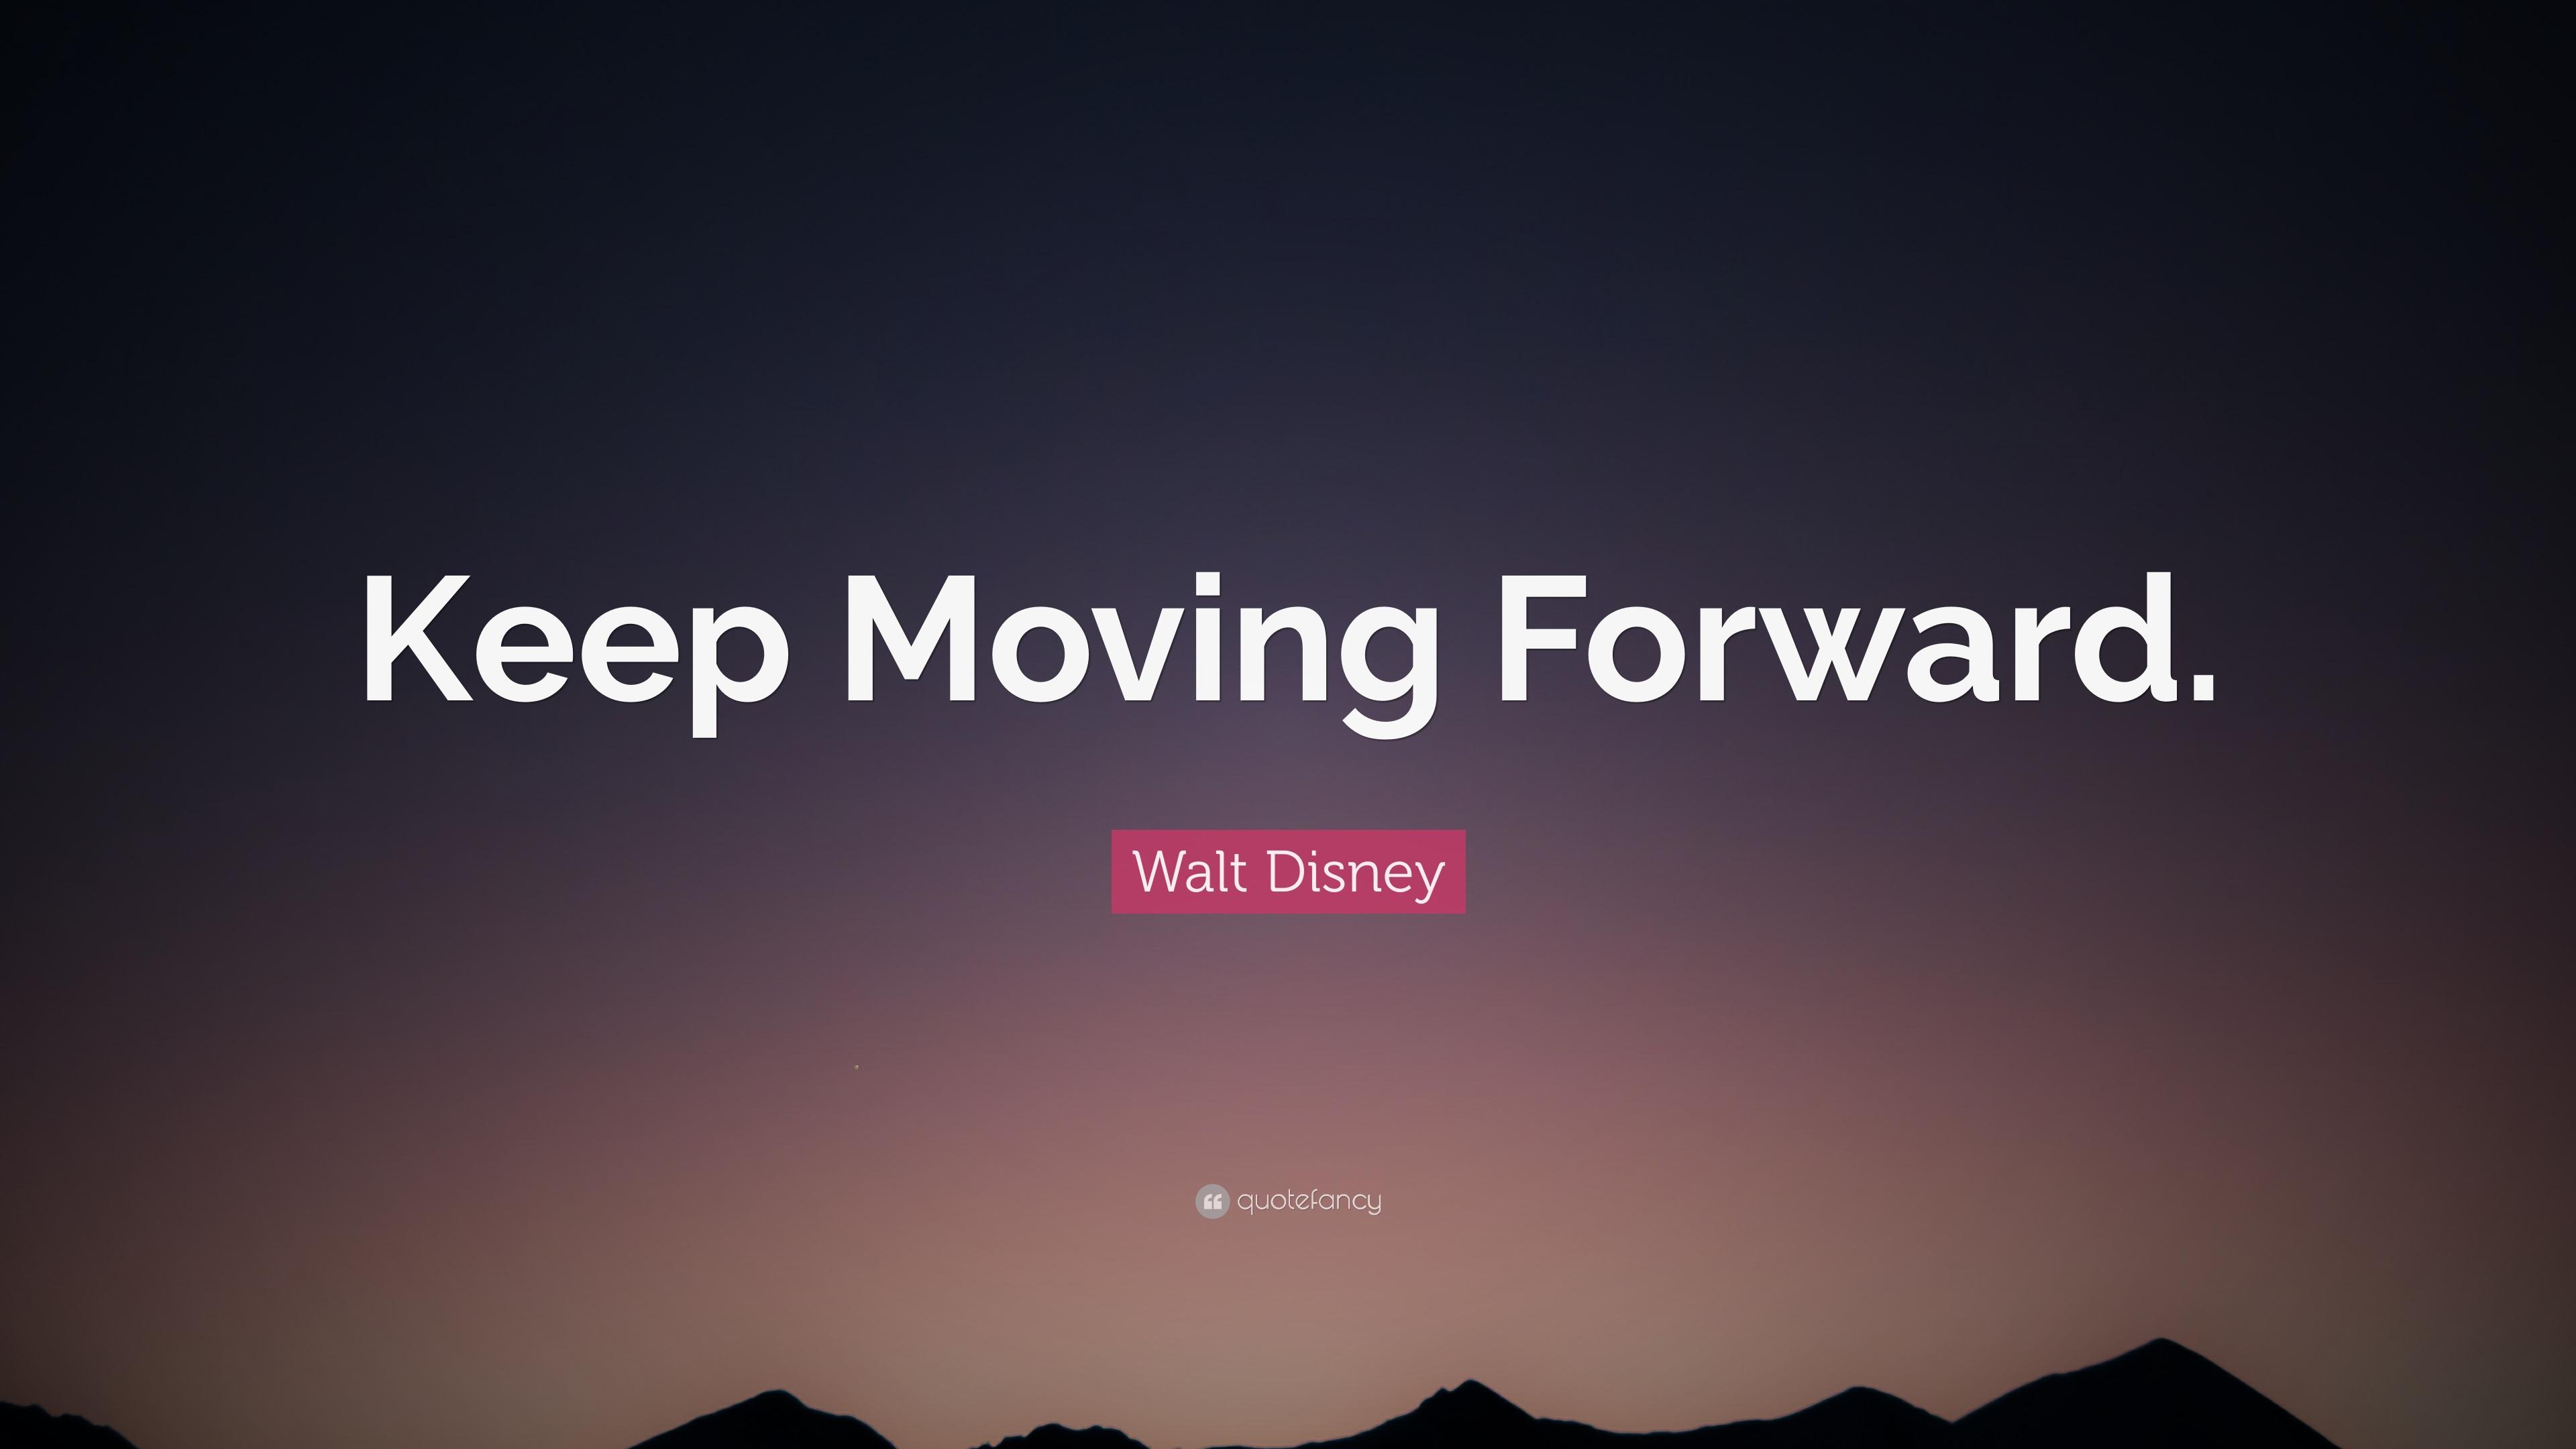 Walt Disney Quote: “Keep Moving Forward.” (10 wallpaper)